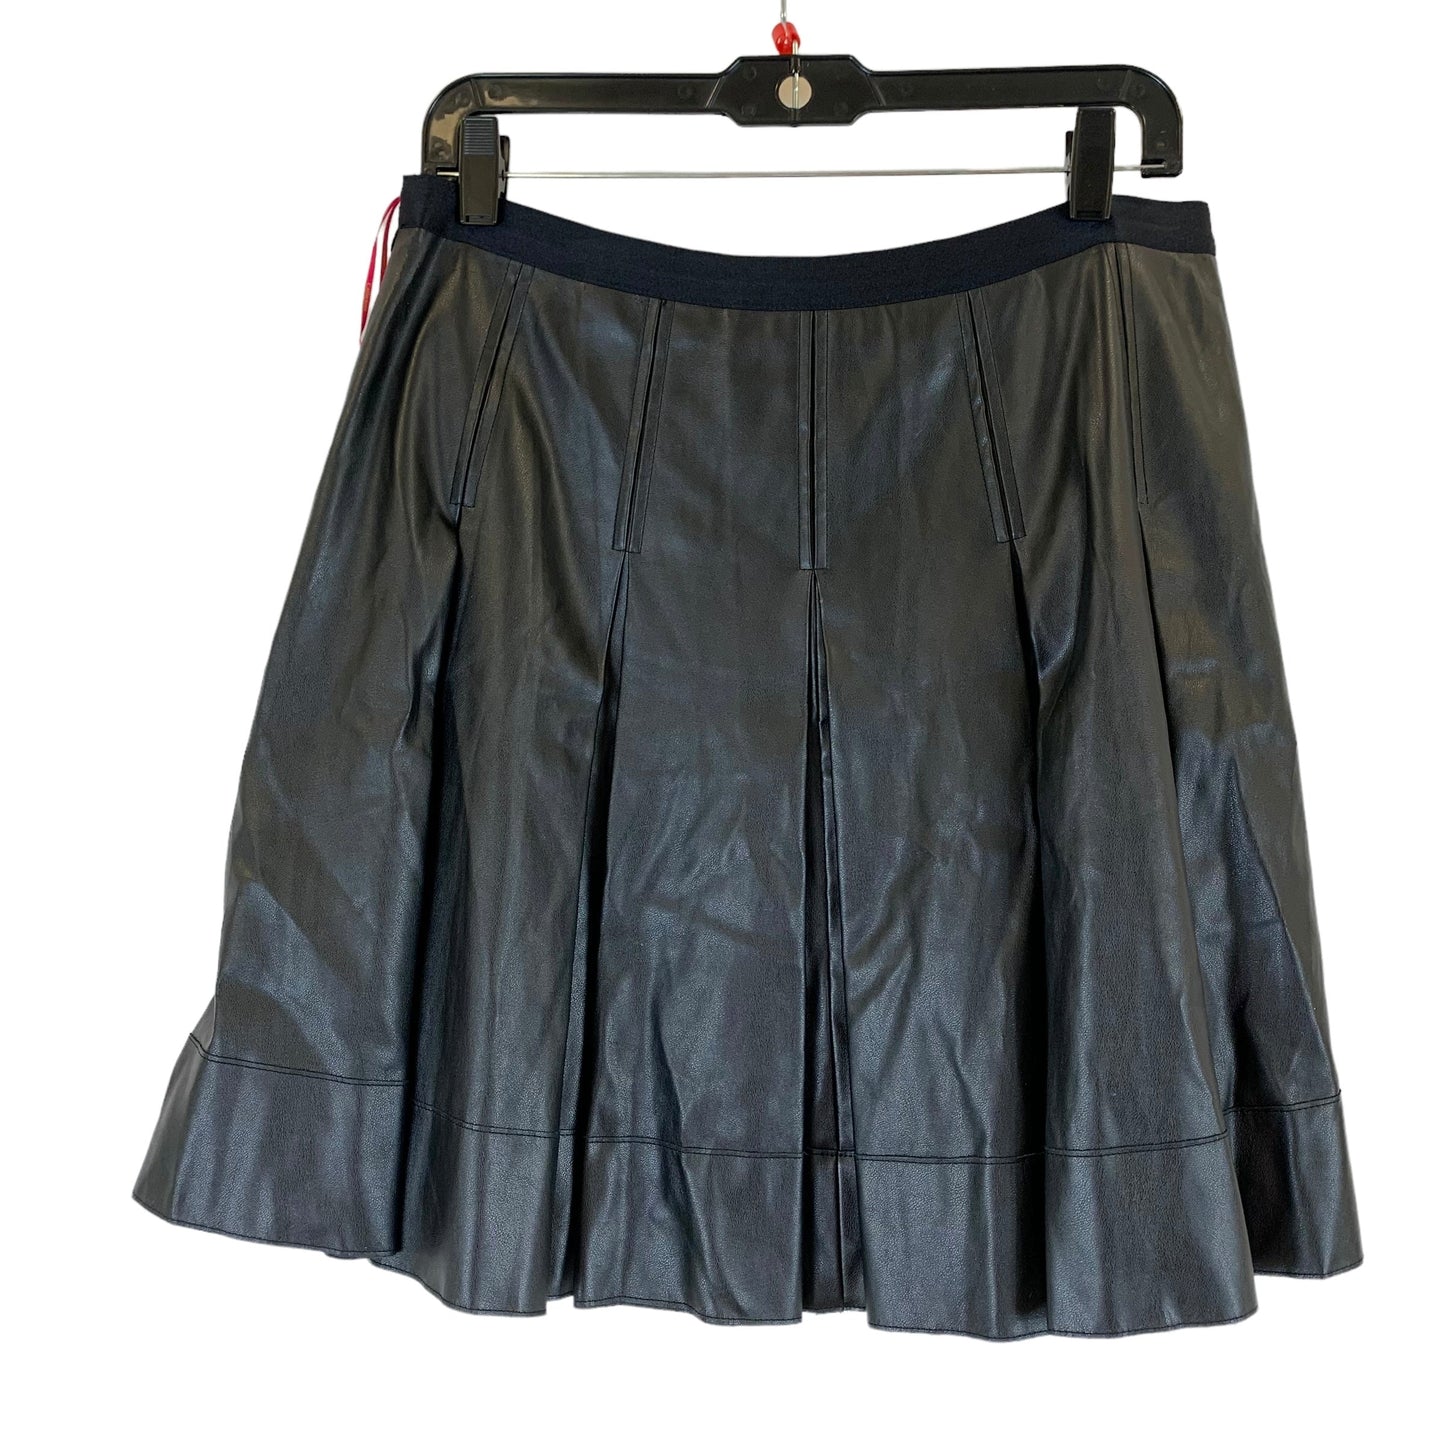 Skirt Mini & Short By Catherine Malandrino  Size: L